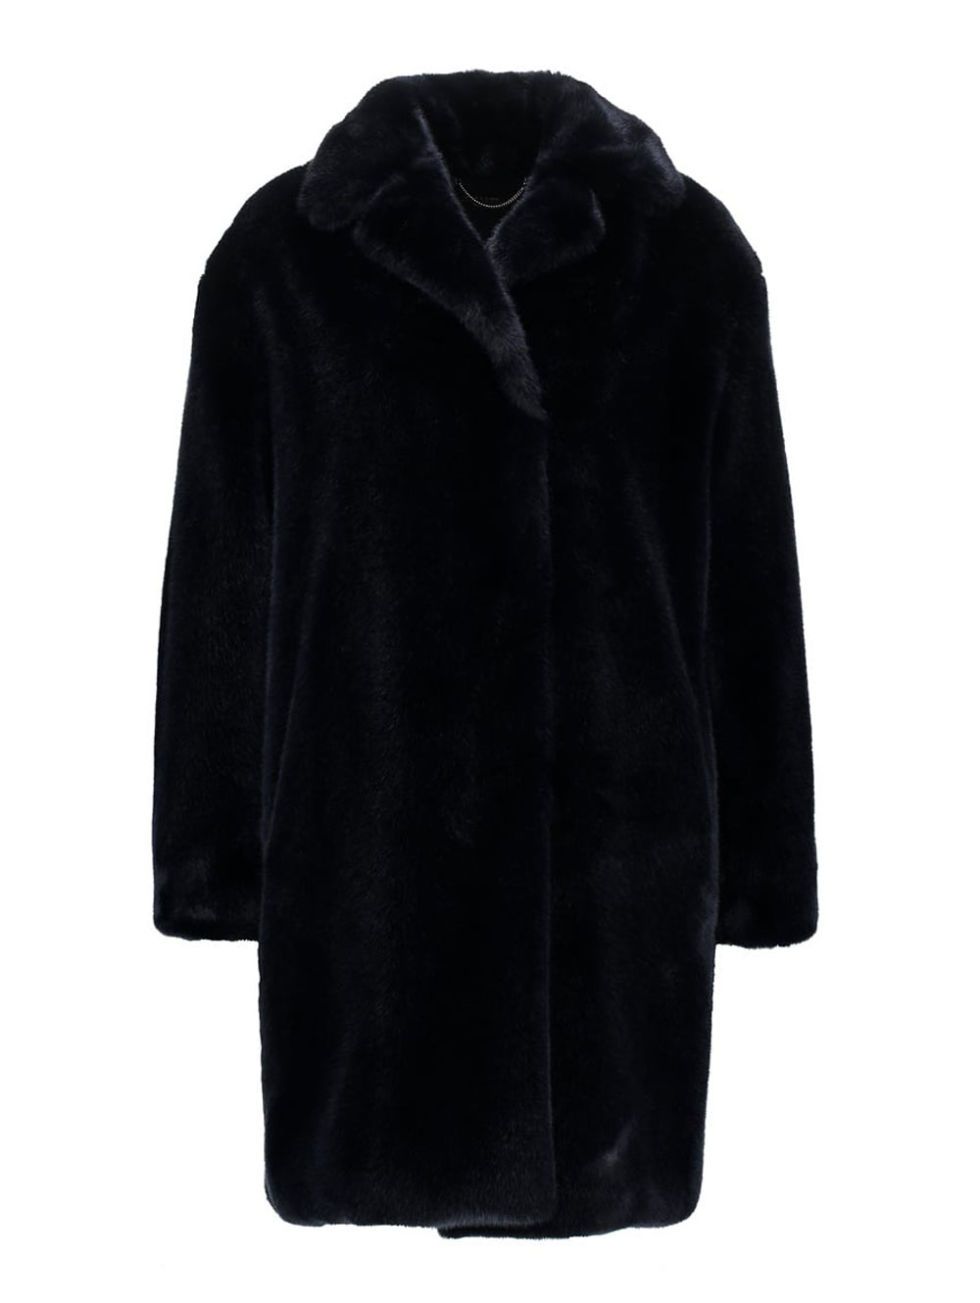 Sleeve, Textile, Outerwear, Coat, Jacket, Natural material, Fur, Woolen, Fur clothing, 